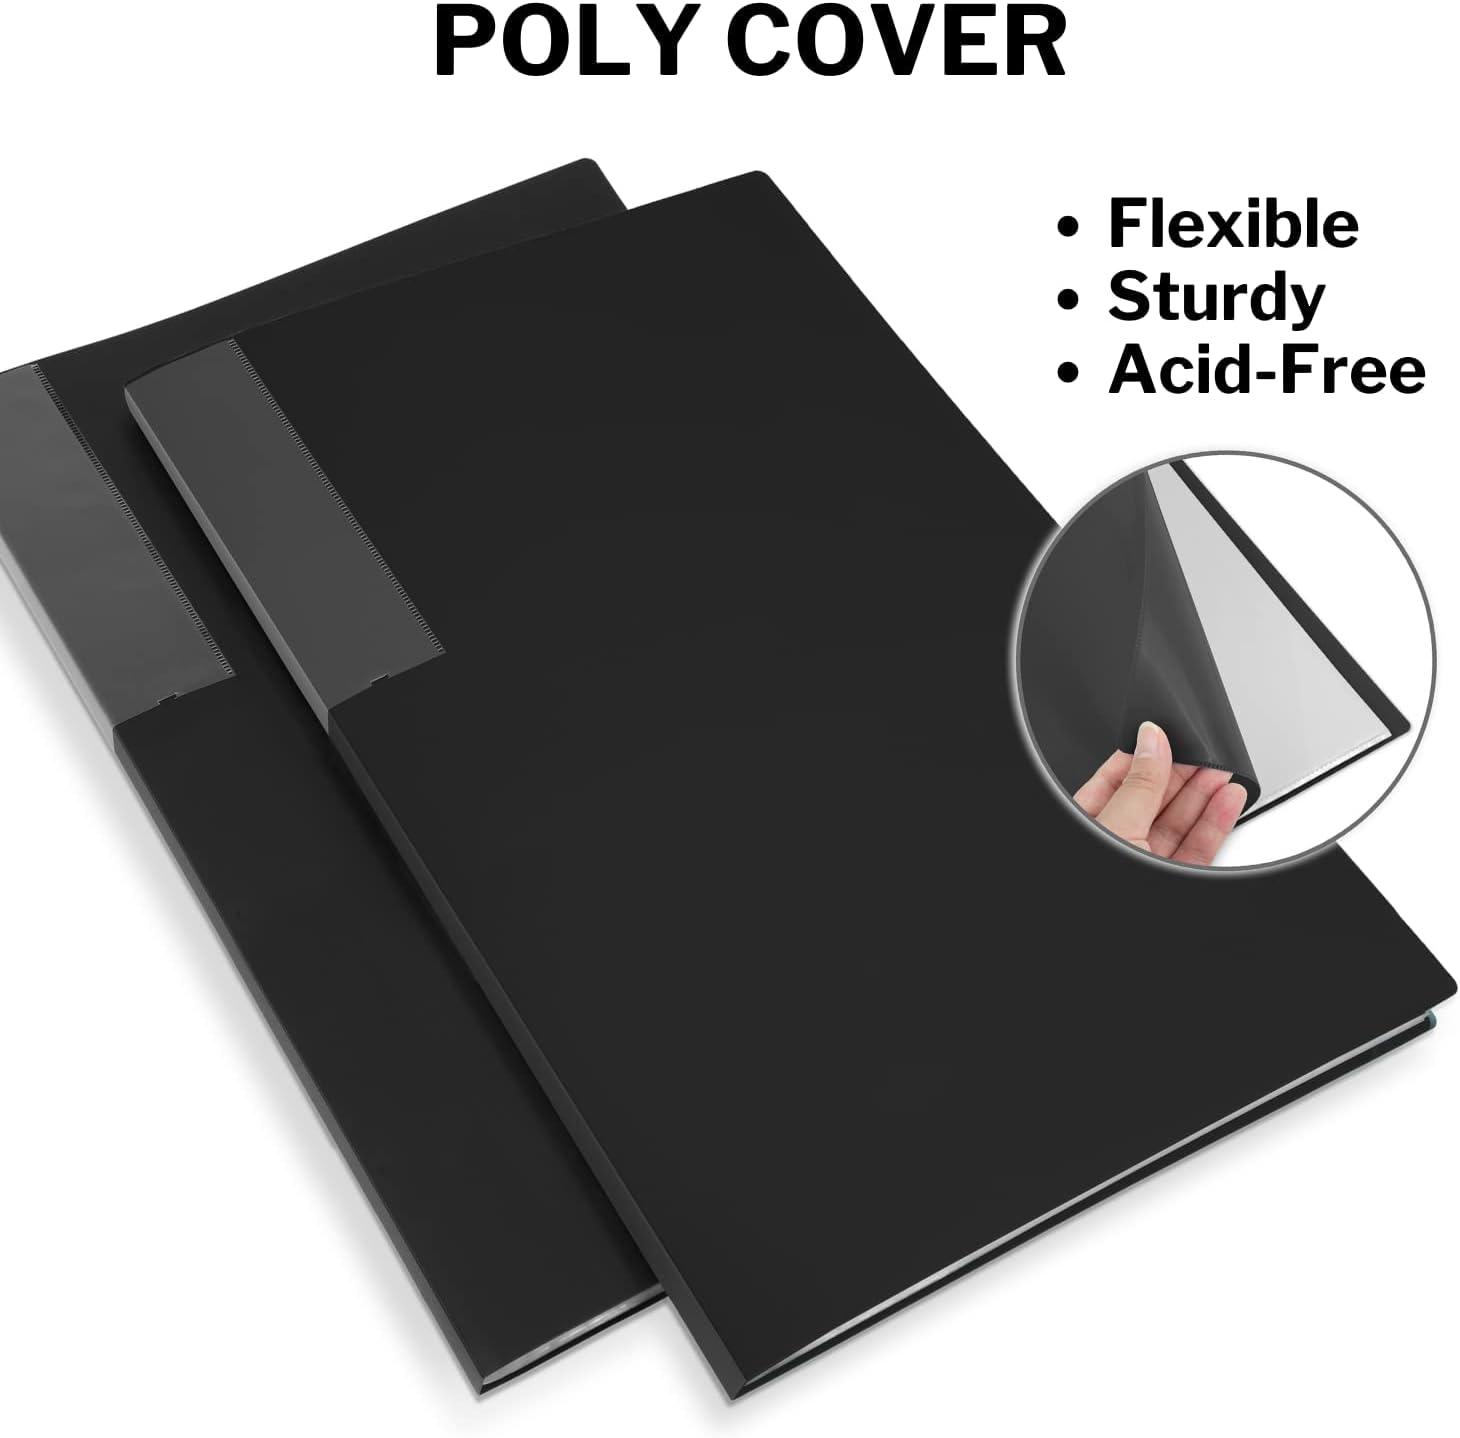 Dunwell 11x17 Portfolio Binder Folder (Black, Vertical) - Binder with Plastic Sleeves and Poly Cover, Portfolio Presentation Book with 24 Binder